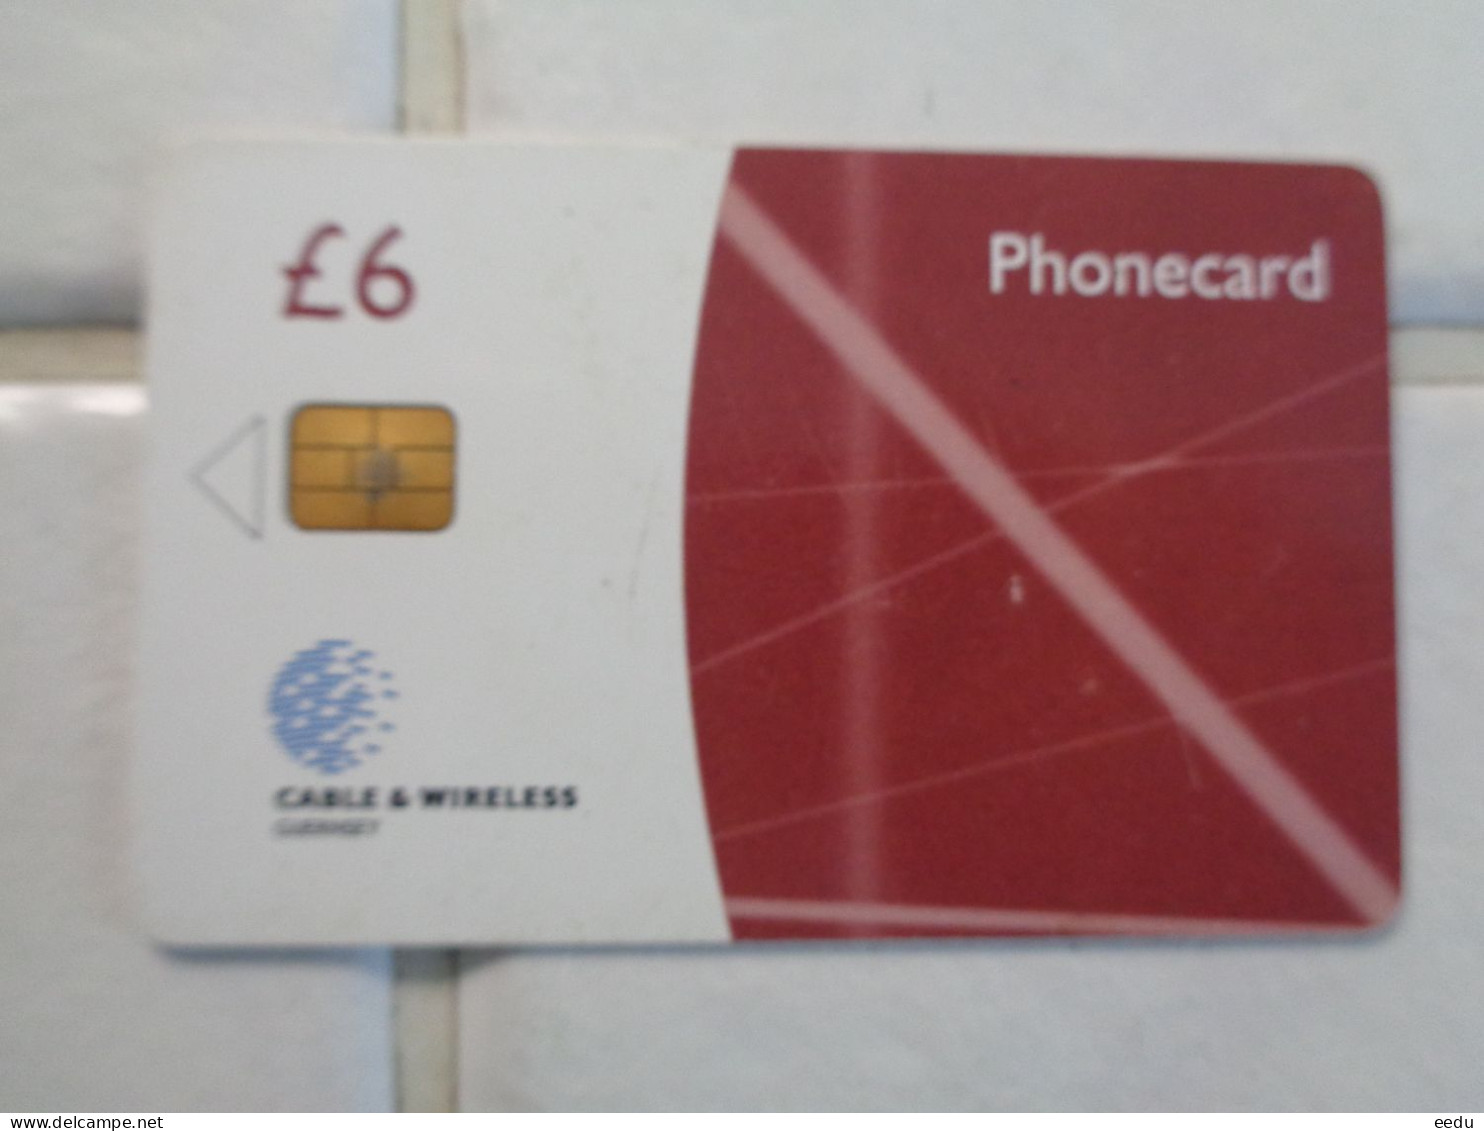 Guernsey Phonecard - [ 7] Jersey And Guernsey